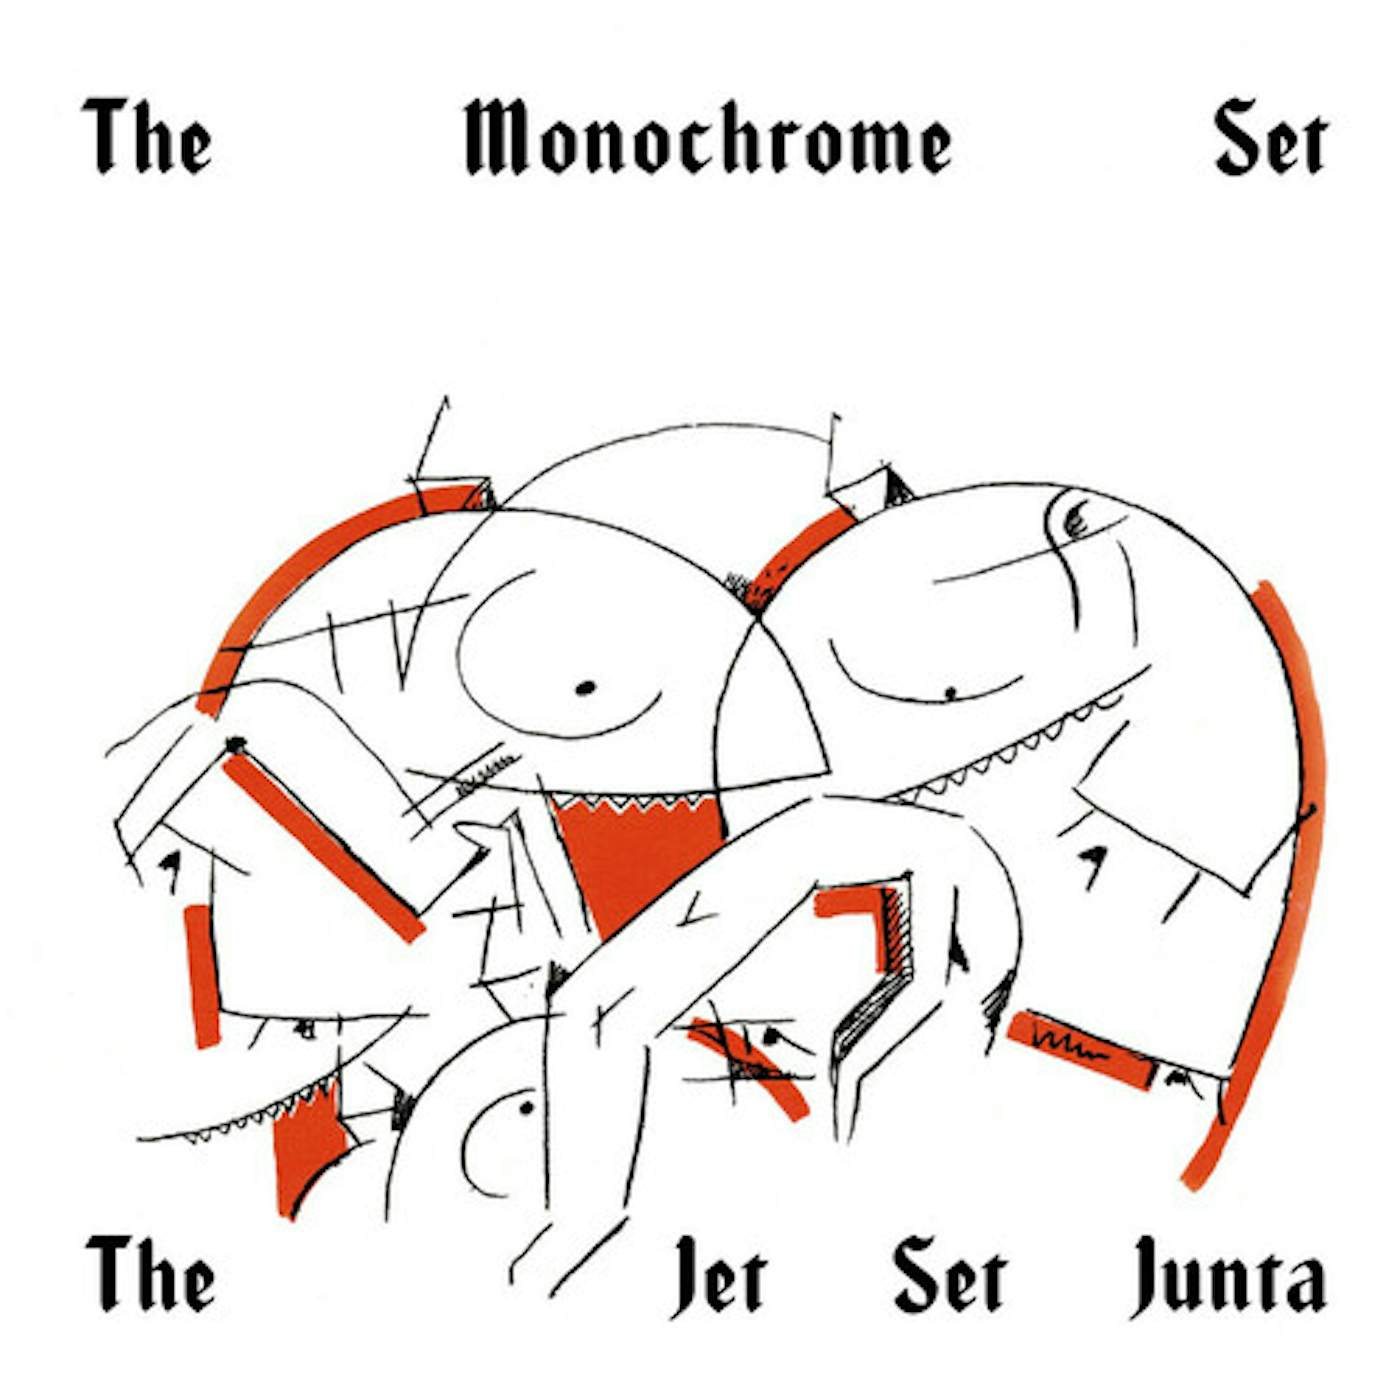 The Monochrome Set JET SET JUNTA Vinyl Record